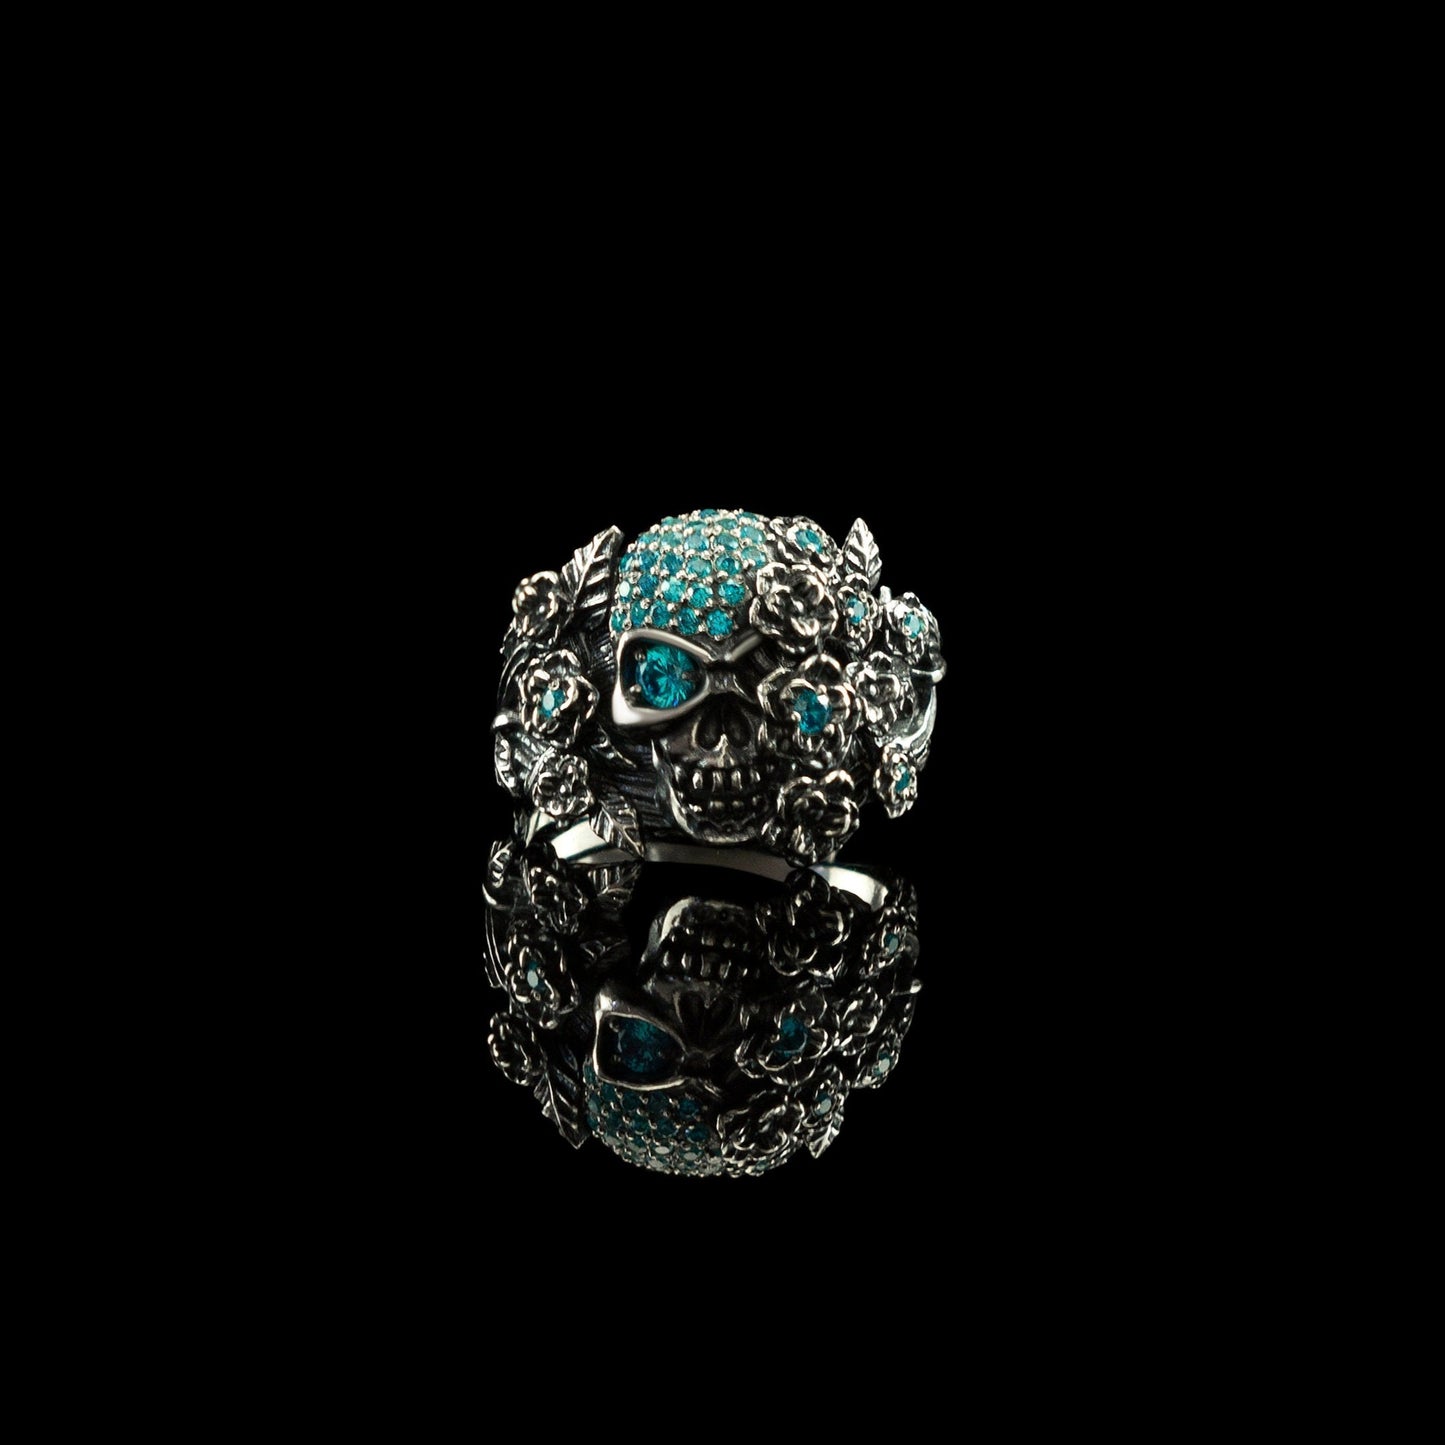 Blue women's skull ring Adjustable silver skull ring Blue gemstones Silver skull ring Skull with flowers